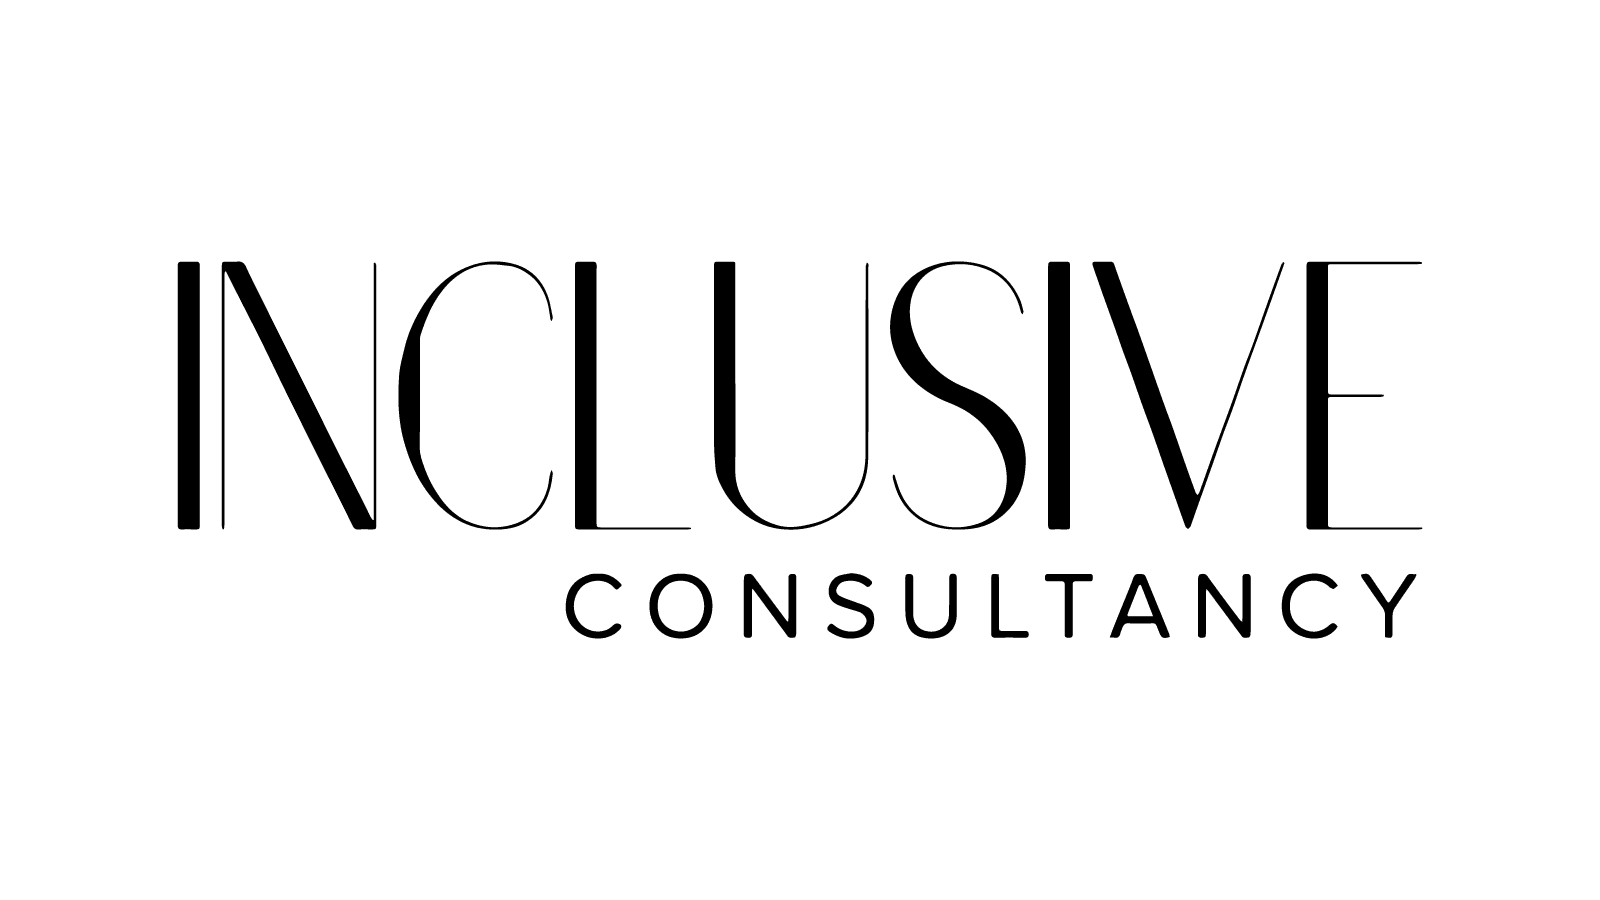 Inclusive consultancy logo